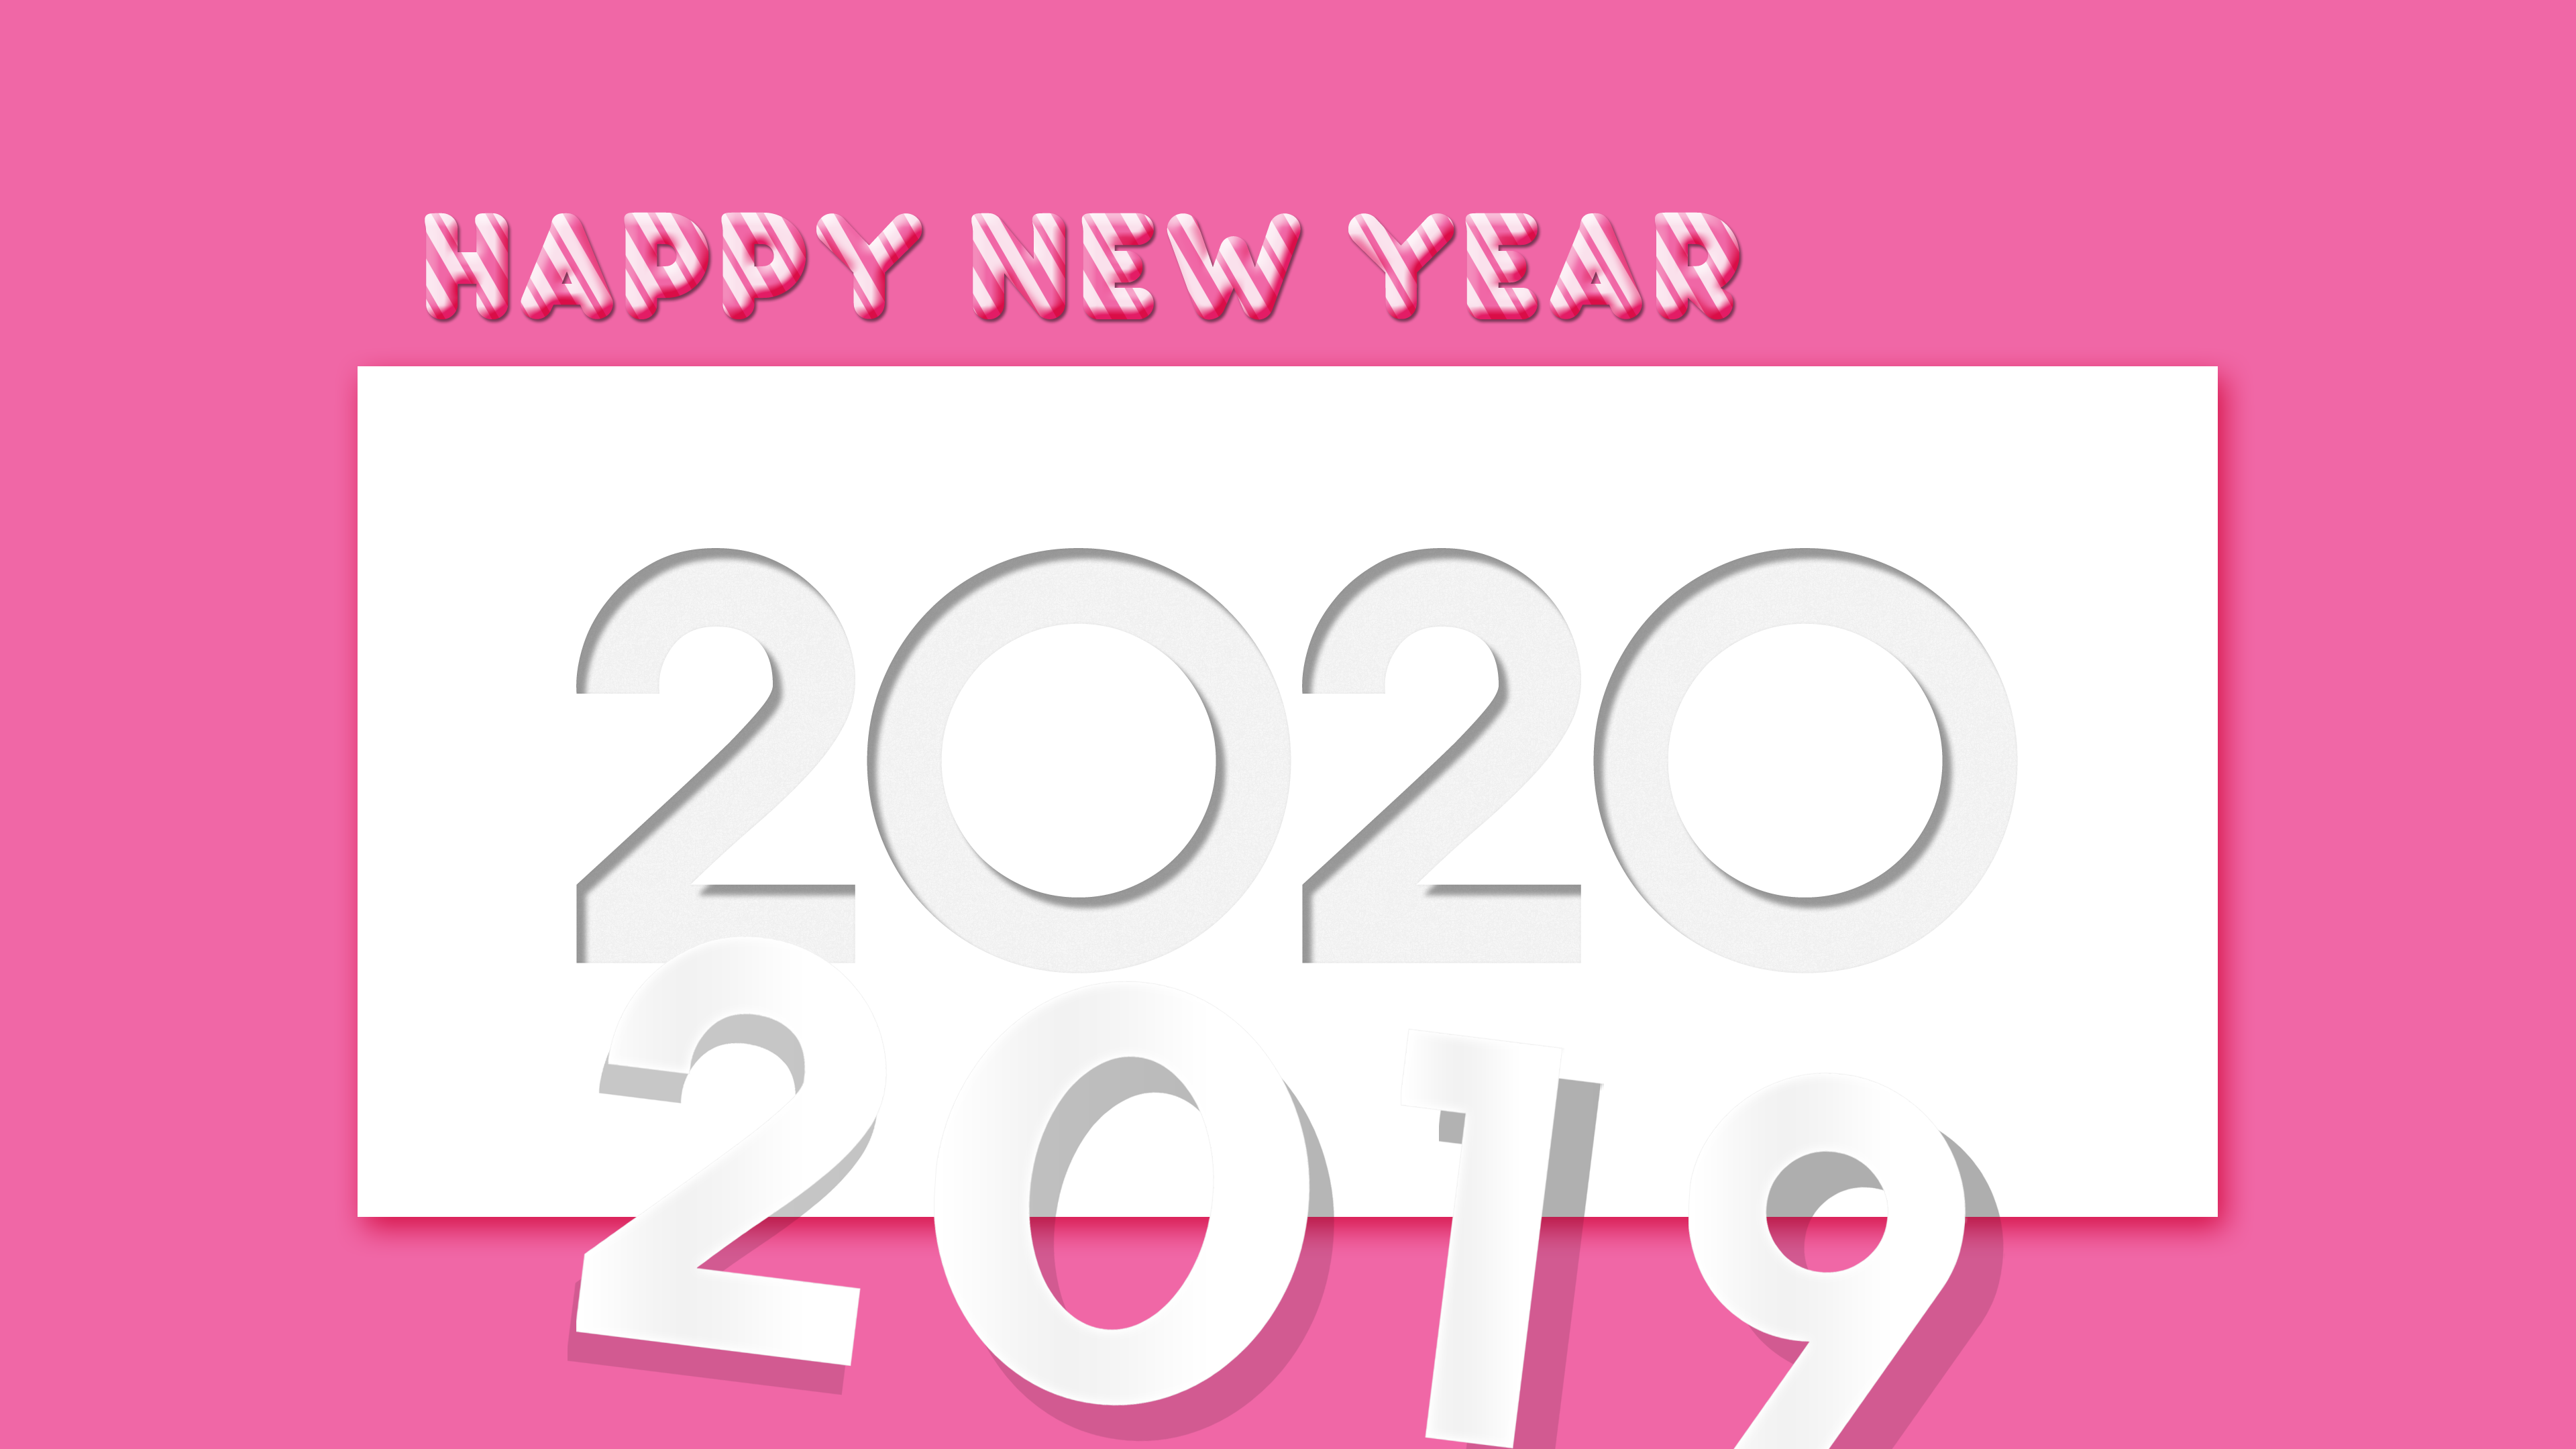 New Year 2020 4k Ultra HD Wallpaper Background Image 3840x2160